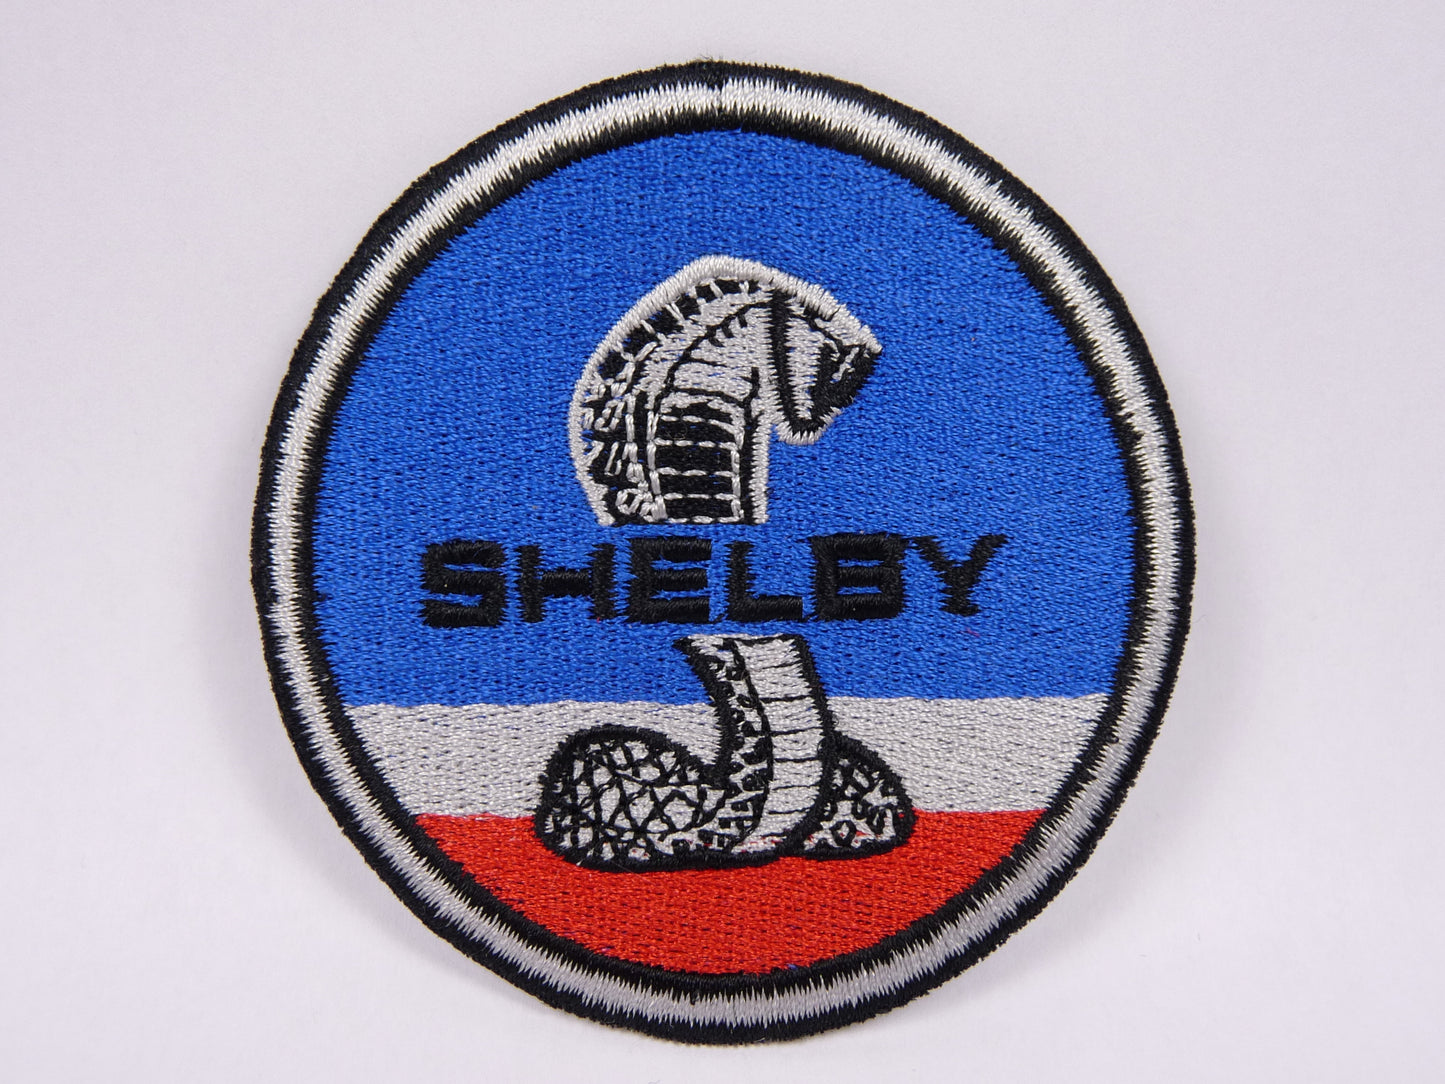 PTC128 Patch brodé thermocollé : logo Shelby Diamètre environ 7.9 cm